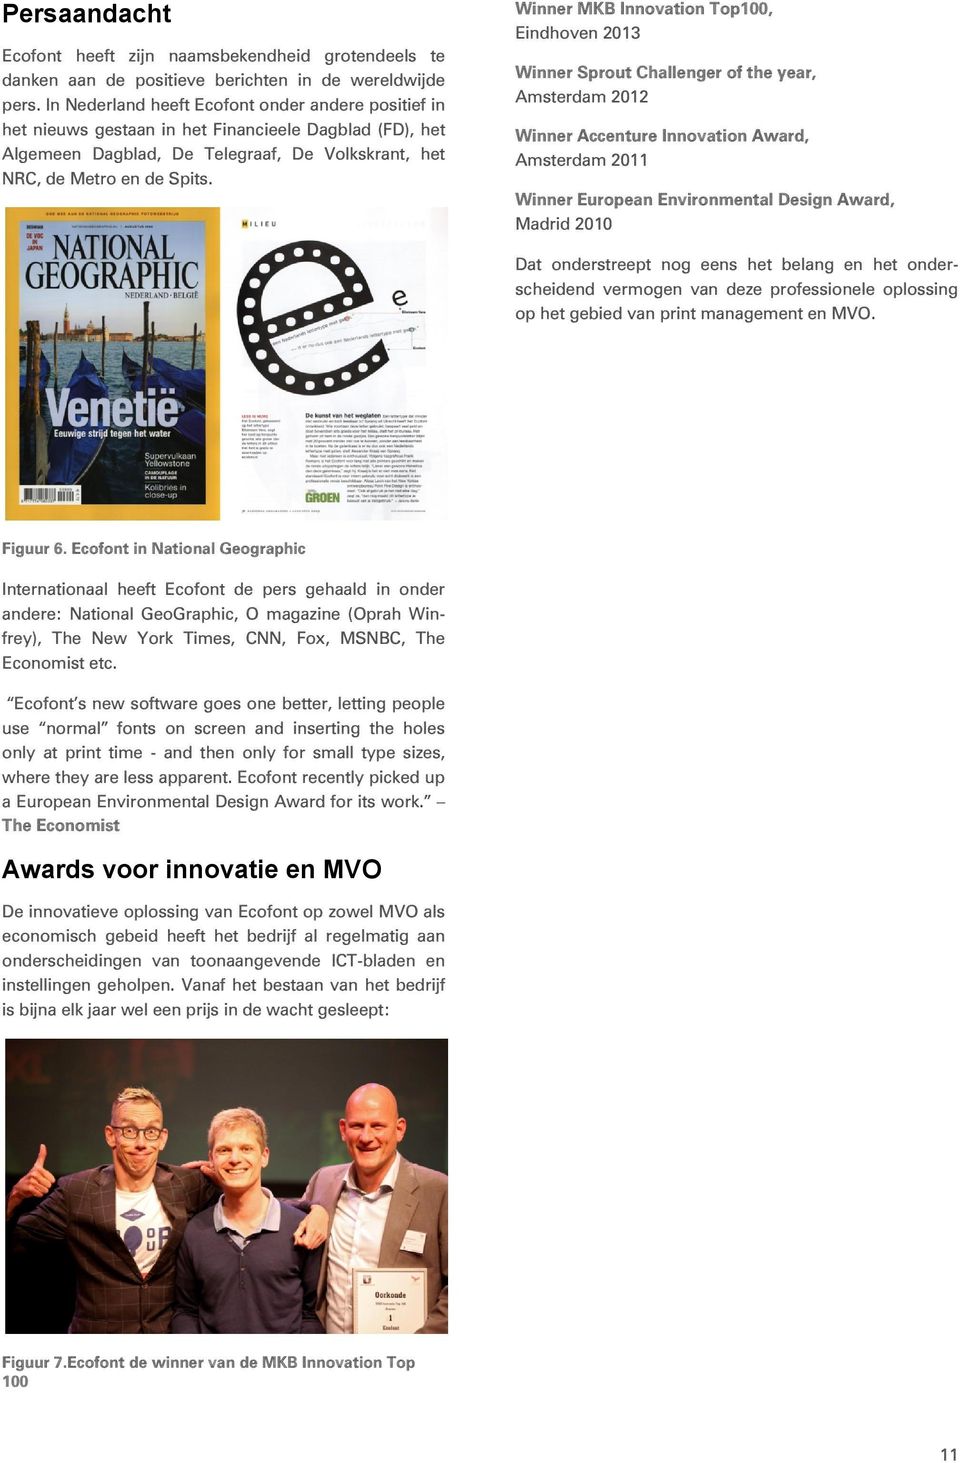 Winner MKB Innovation Top100, Eindhoven 2013 Winner Sprout Challenger of the year, Amsterdam 2012 Winner Accenture Innovation Award, Amsterdam 2011 Winner European Environmental Design Award, Madrid